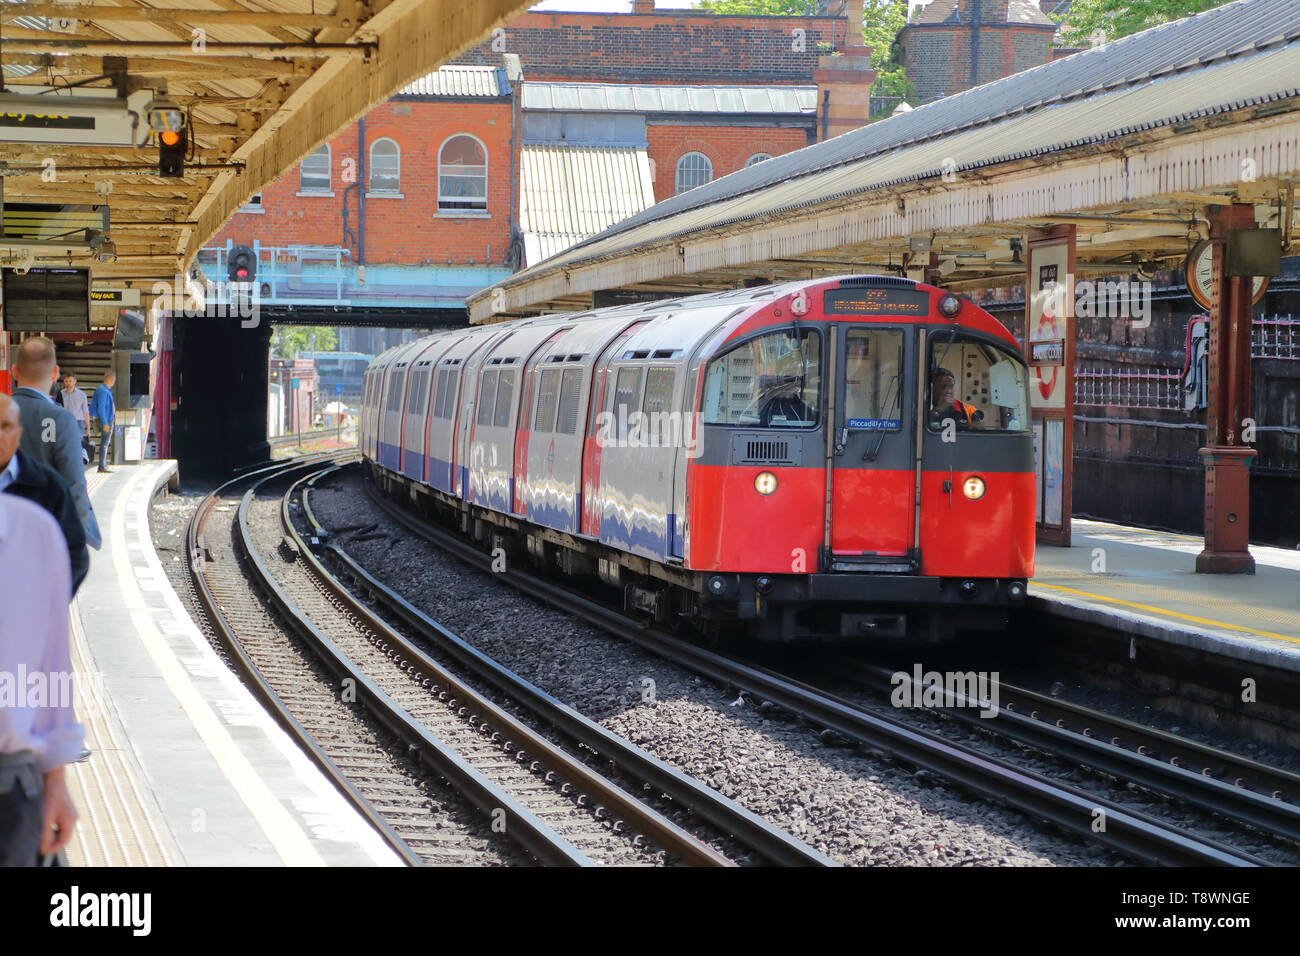 An Underground train arriving at Hammersmith tube station, London, UK Stock Photo